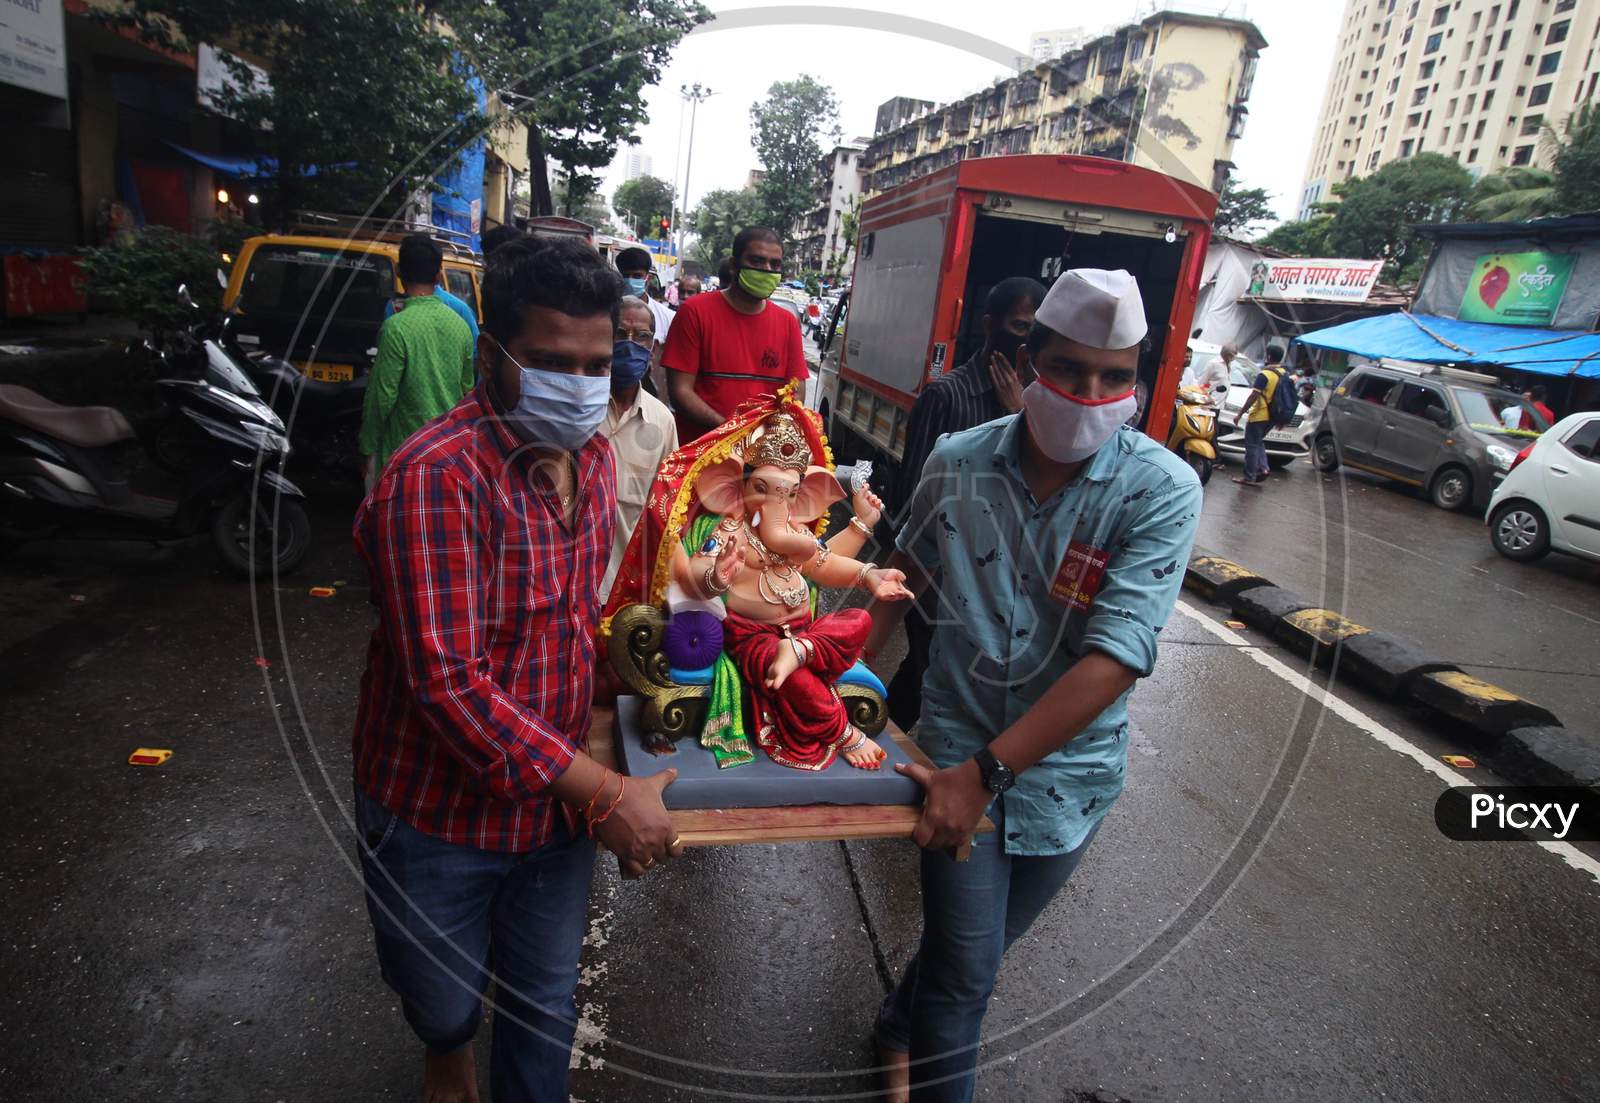 Devotees wearing masks carry home an idol of elephant-headed Hindu god Ganesha for worship during Ganesh Chaturthi festival celebrations in Mumbai, India, on August 22, 2020.